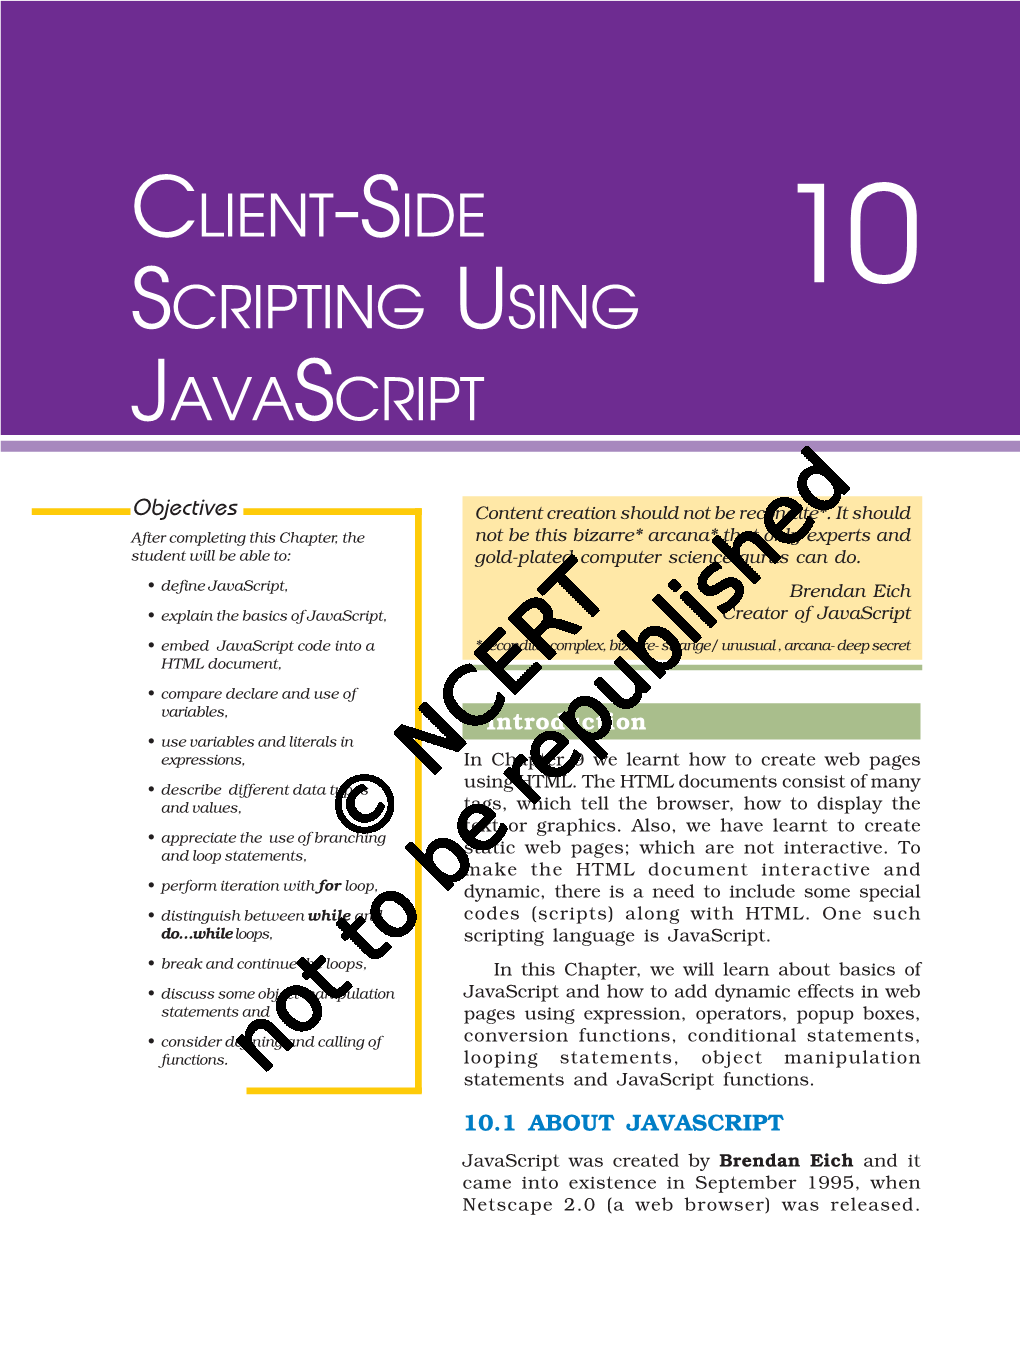 Client-Side Scripting Using Javascript